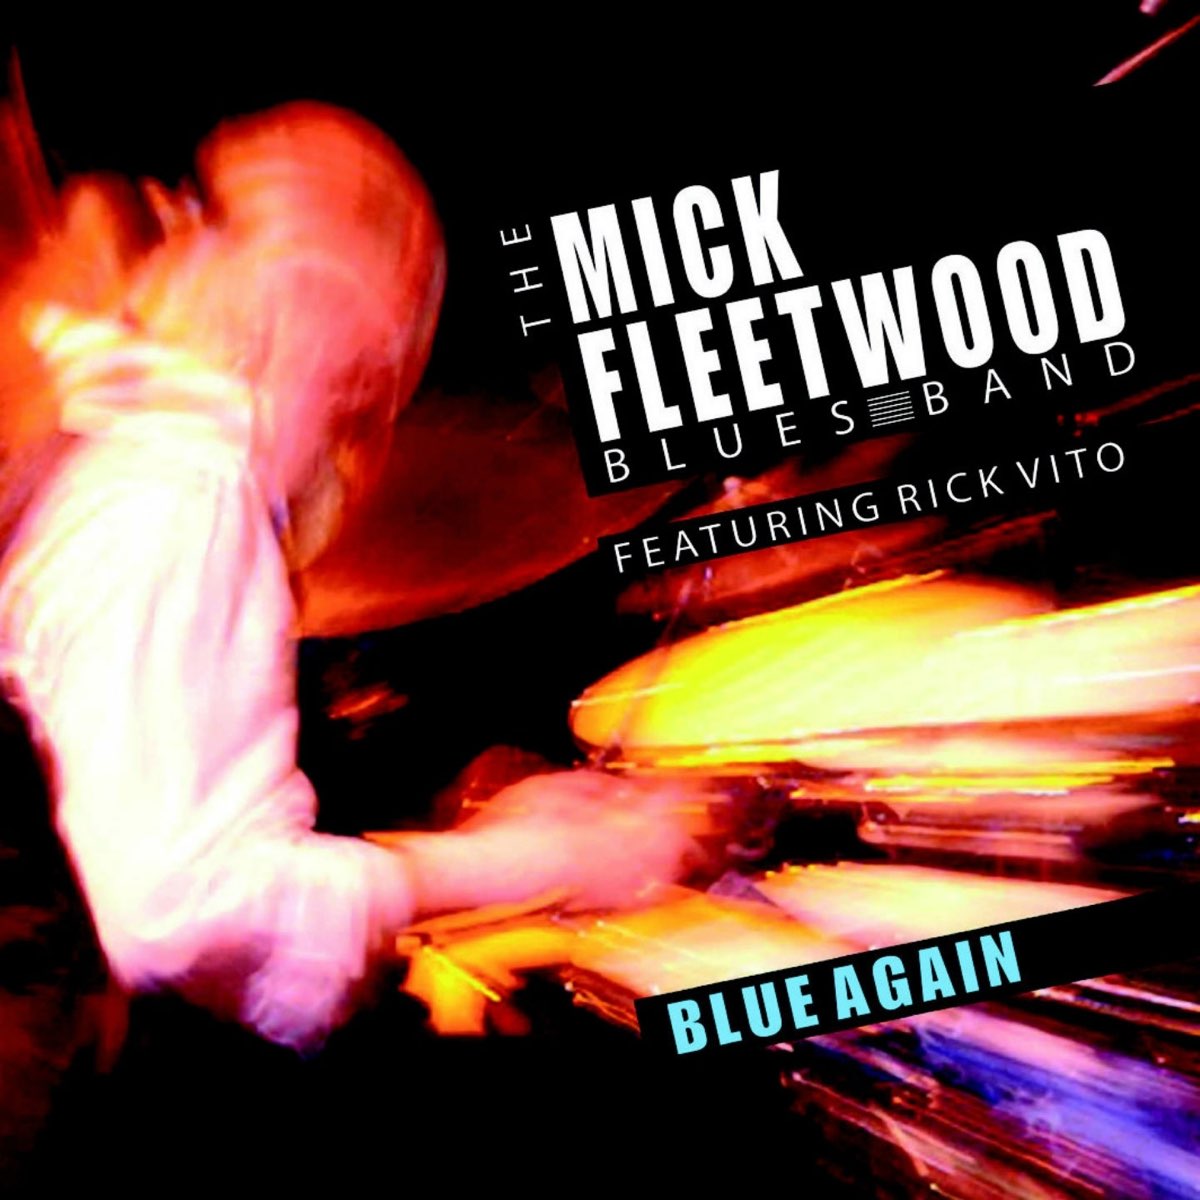 Blue again. Mick Fleetwood Blues Band. Rick Vito Band. Музыка the Fleetwood Blues Band foto. Blue again the Mick Fleetwood Blues Band.